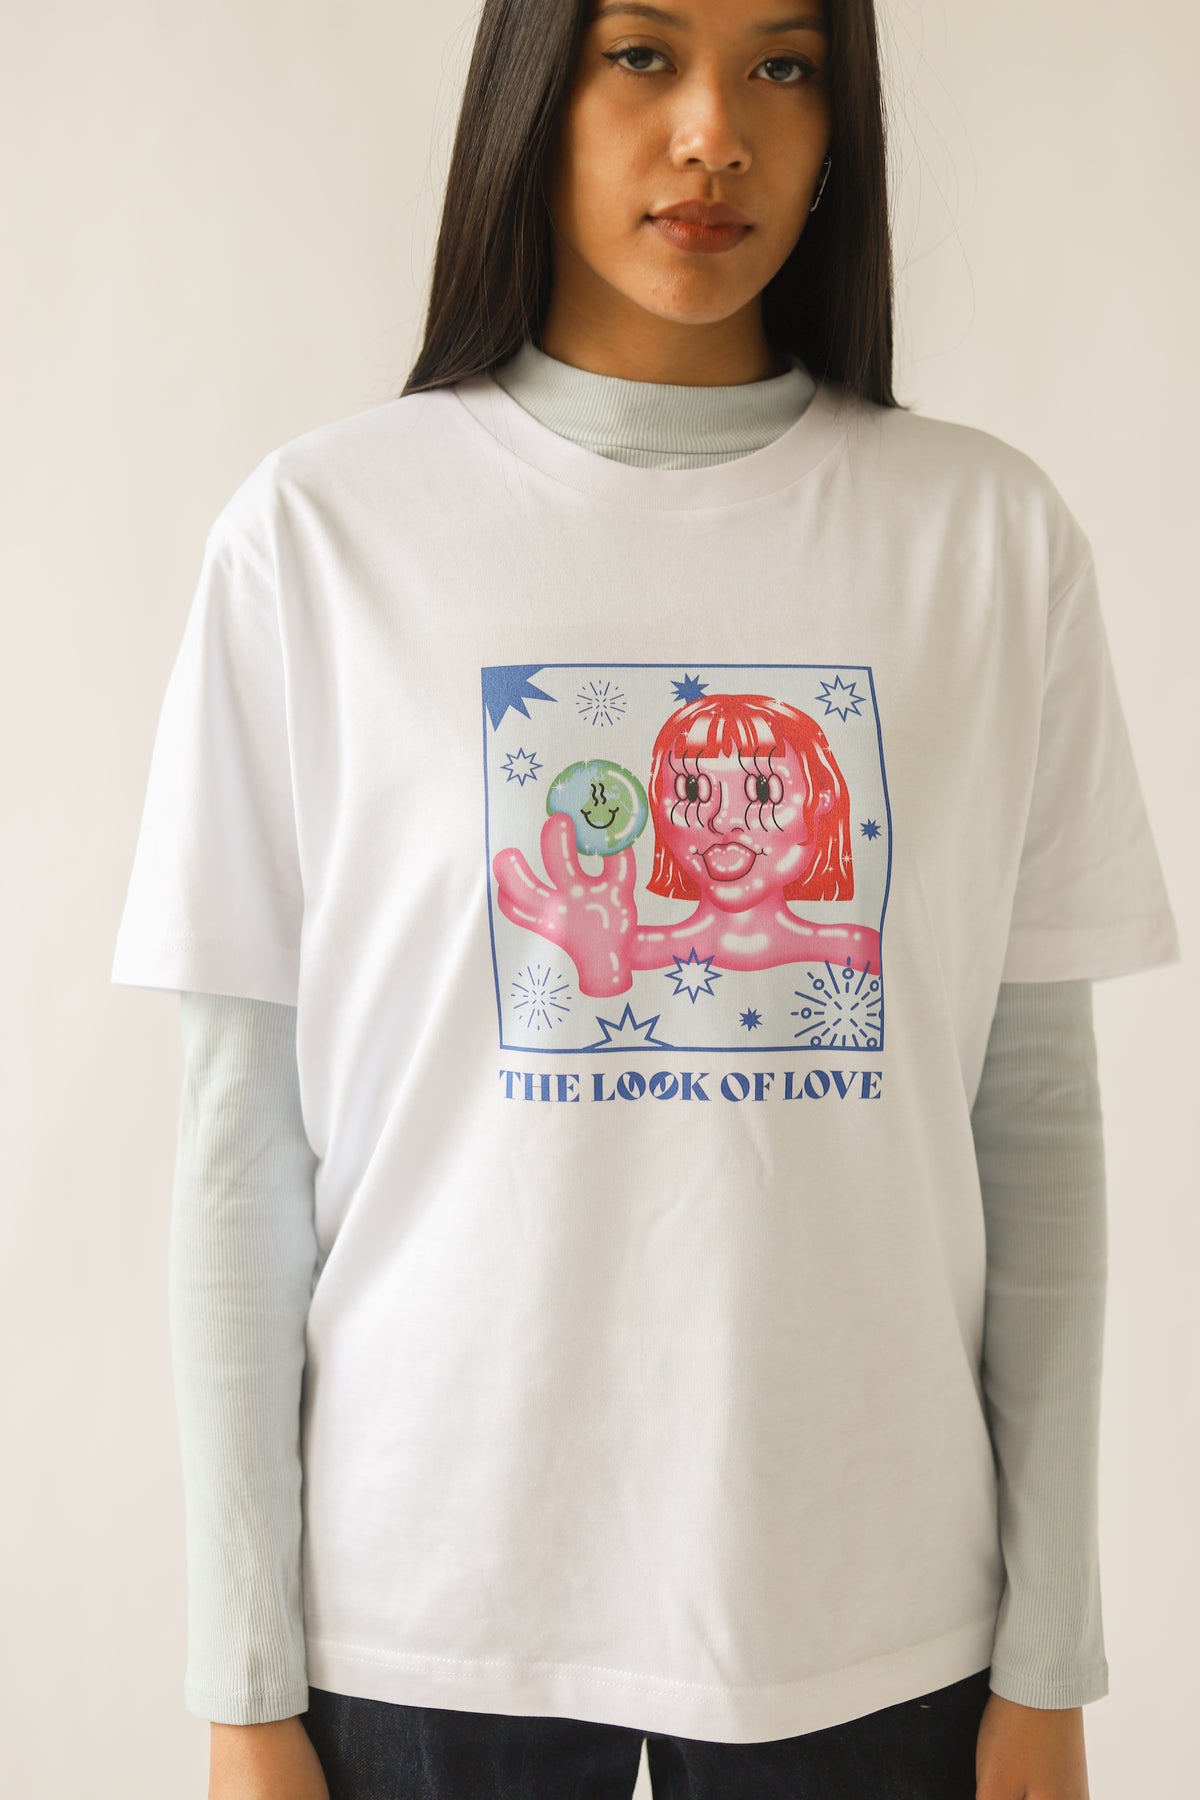 The Look of Love - Unisex Organic Cotton T-Shirt